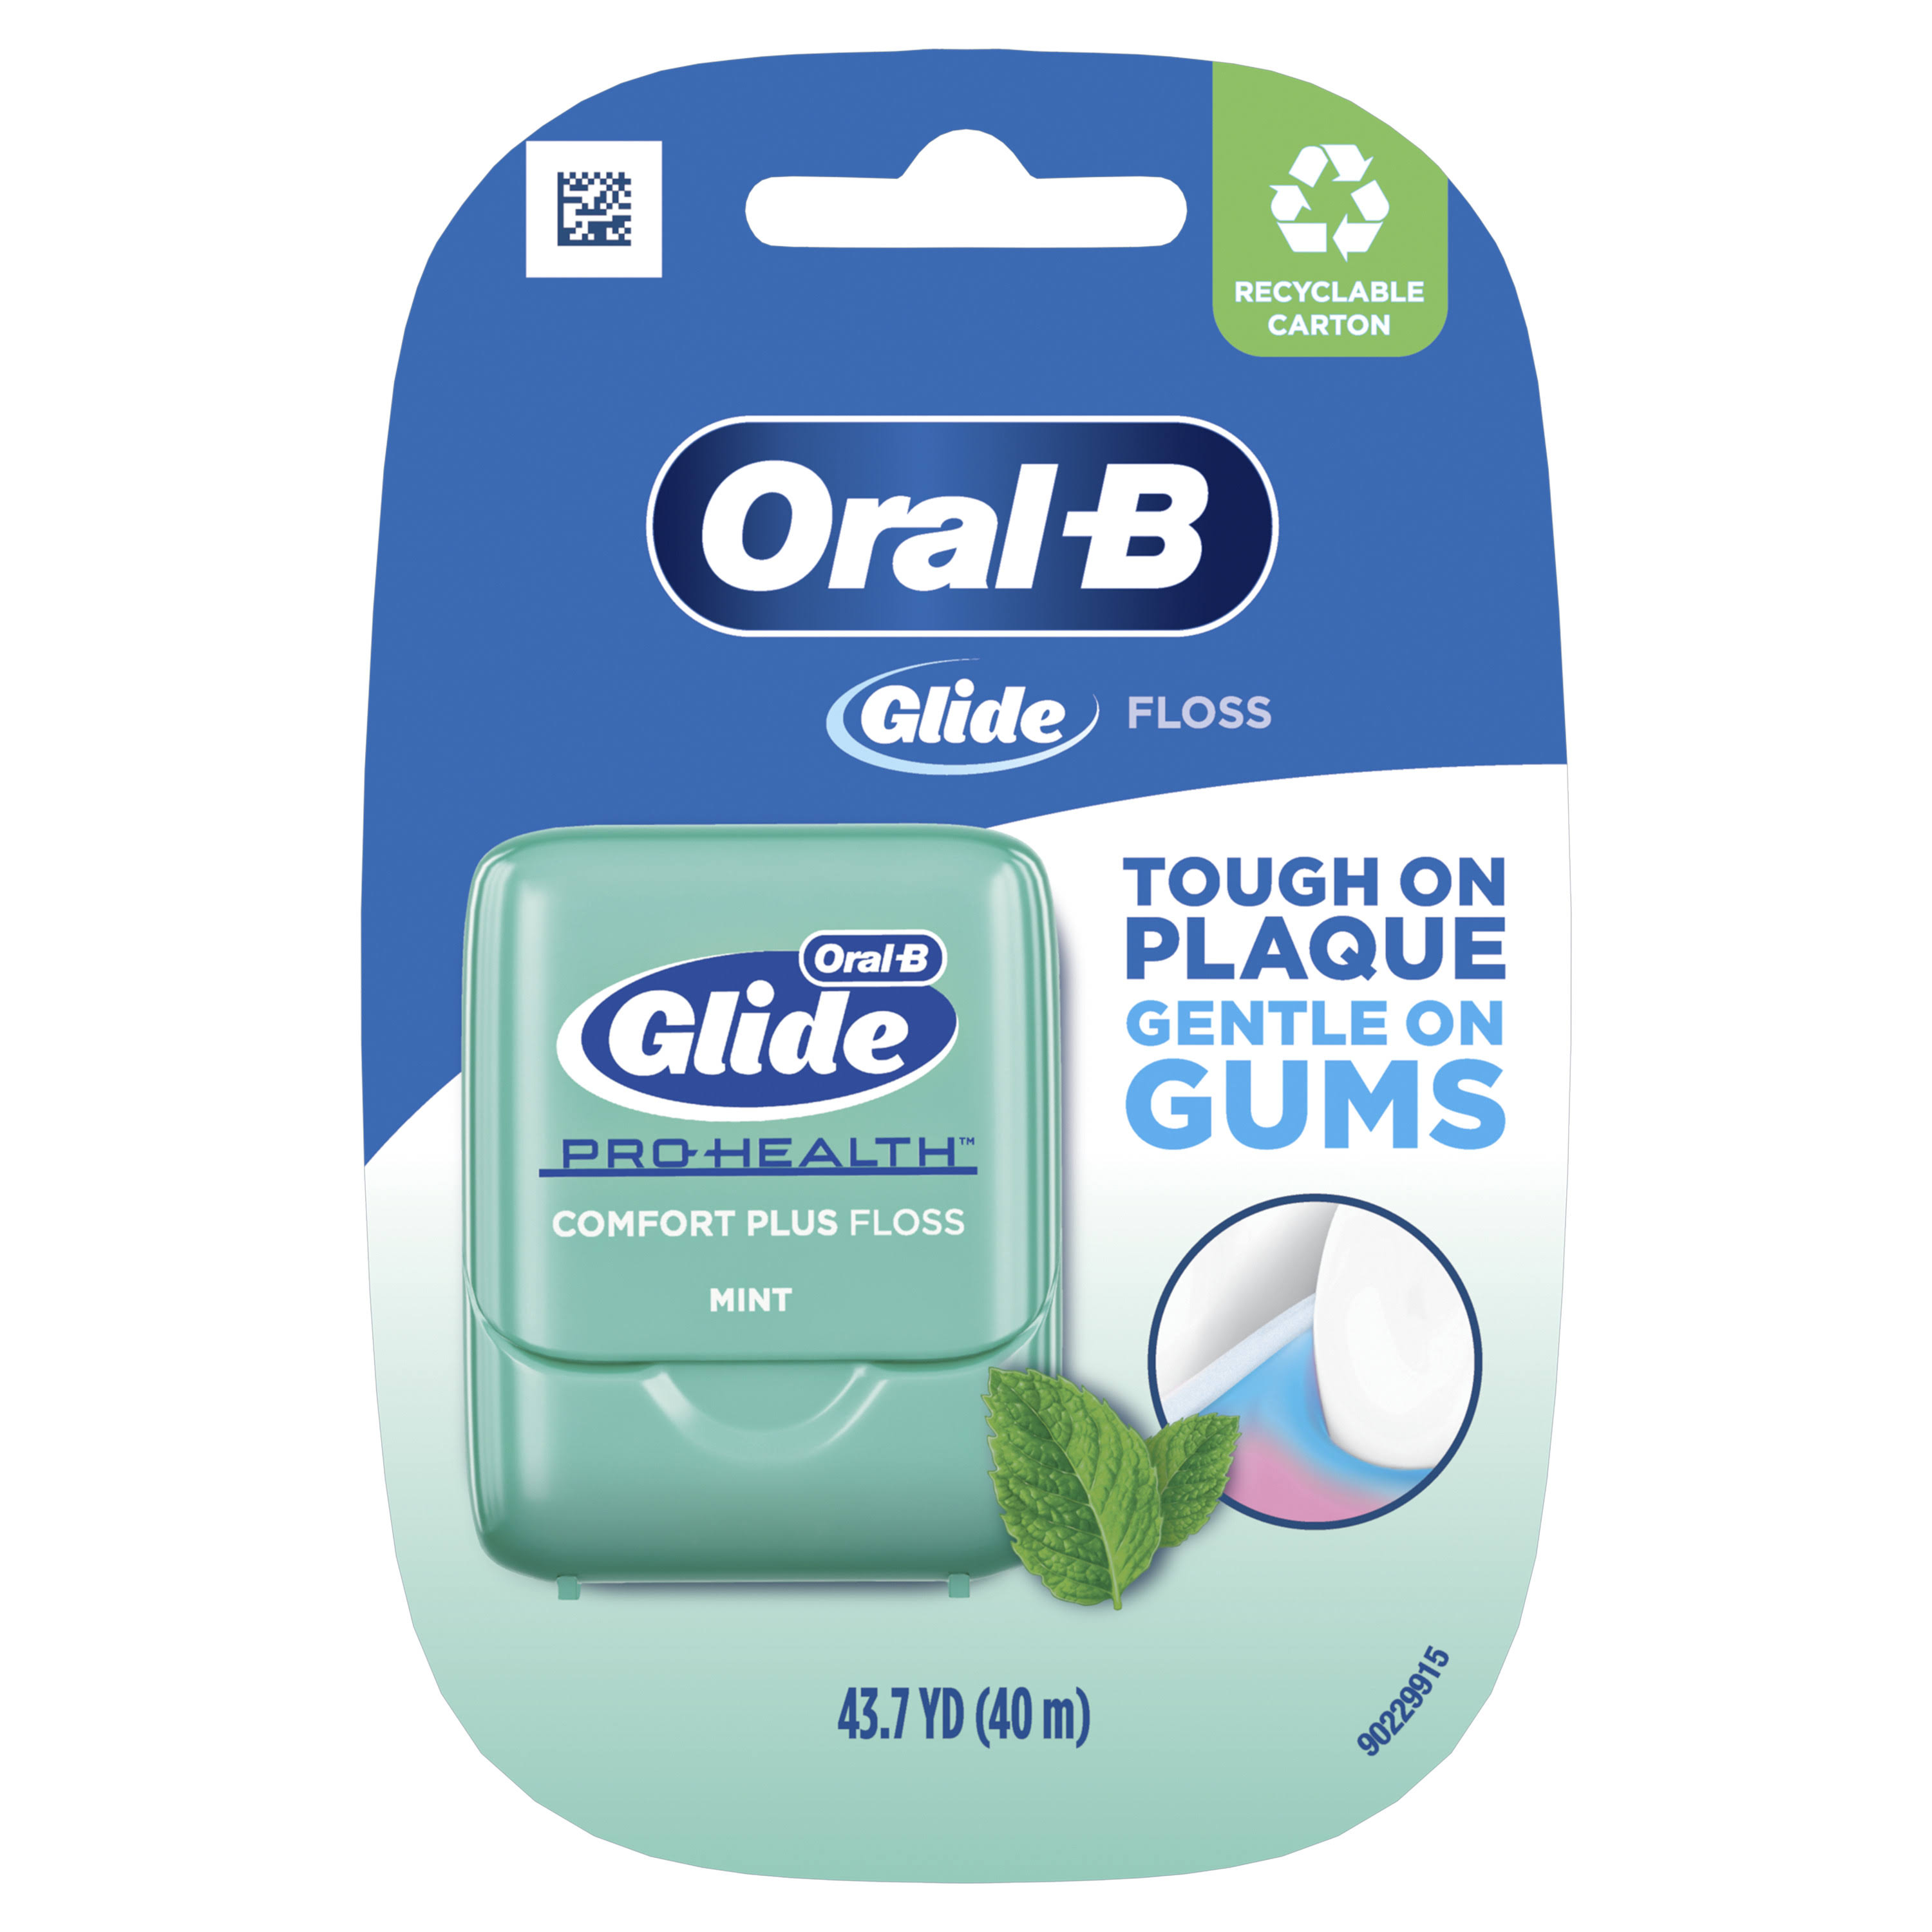 Oral-B Glide Pro-Health Comfort Plus Floss - Mint, 43.7yds